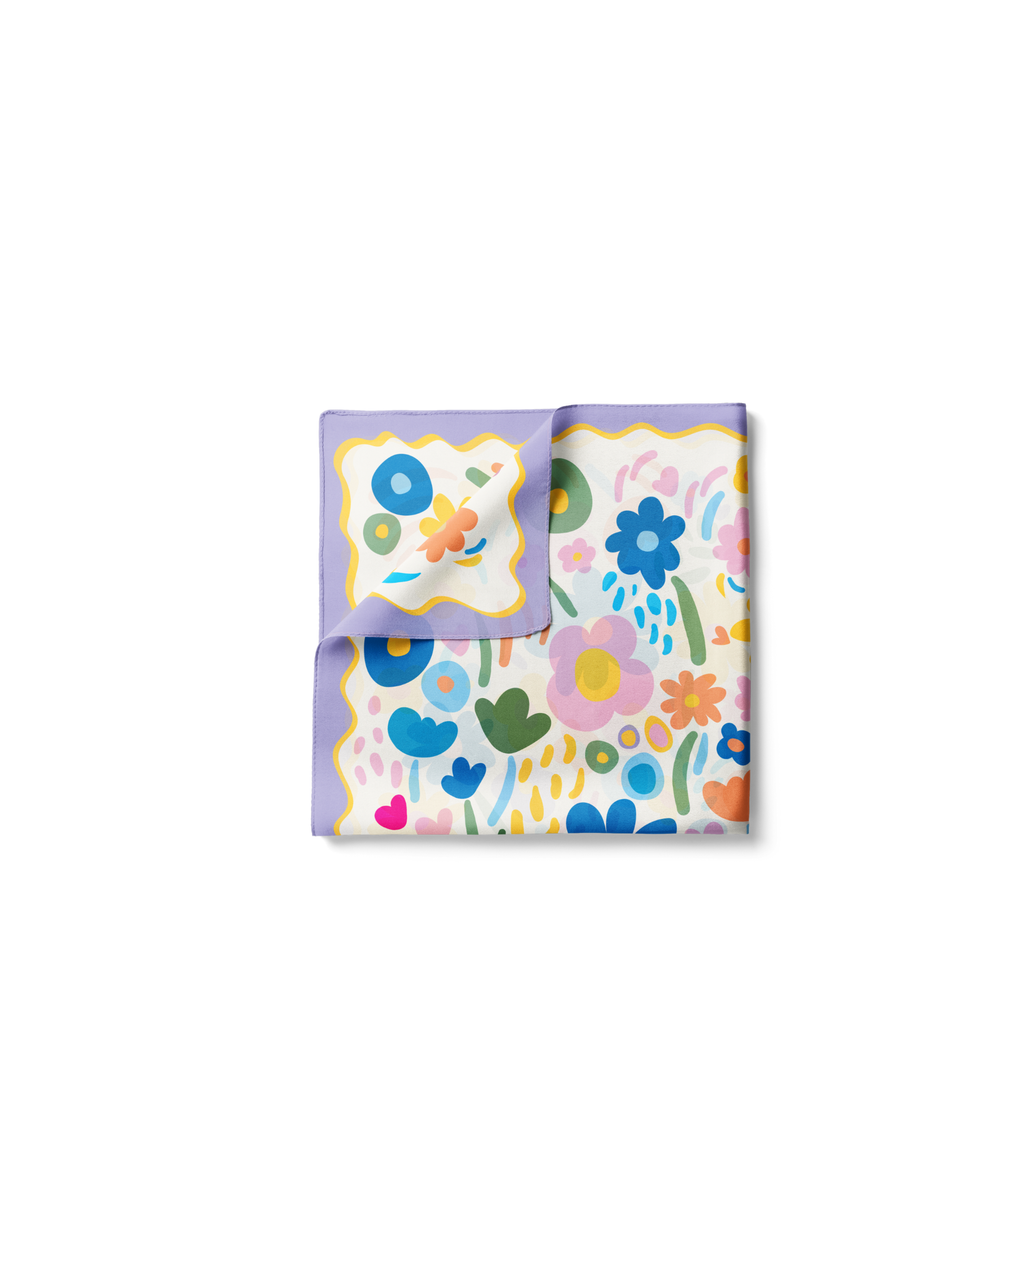 Copy of Copy of Colorful Aura Heart Cute Aesthetic Desktop Wallpaper - 7-1708260039231